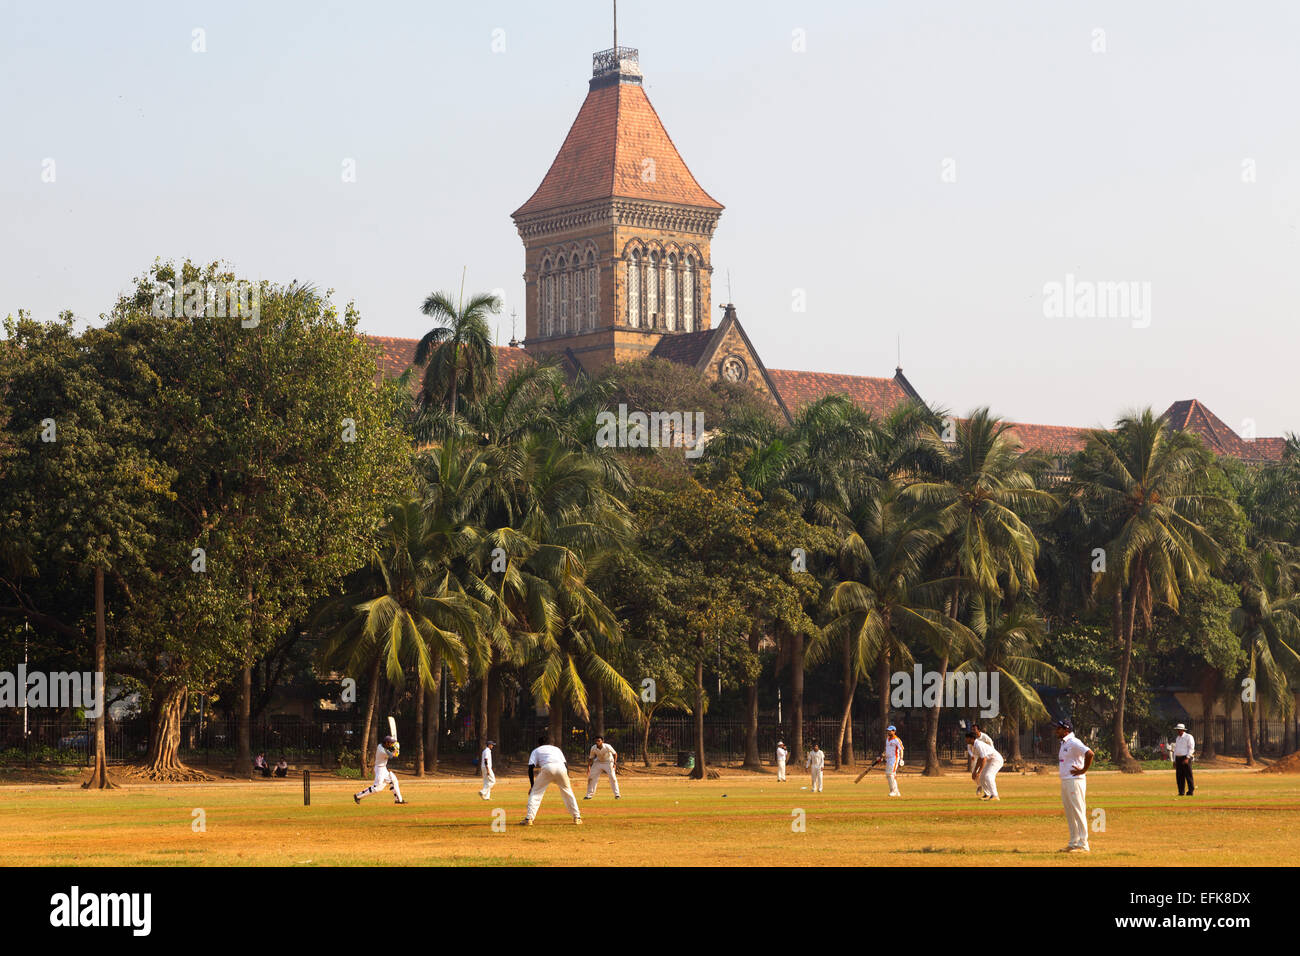 India, Maharashtra, Mumbai, Colaba district, Oval Maidan and men playing cricket Stock Photo